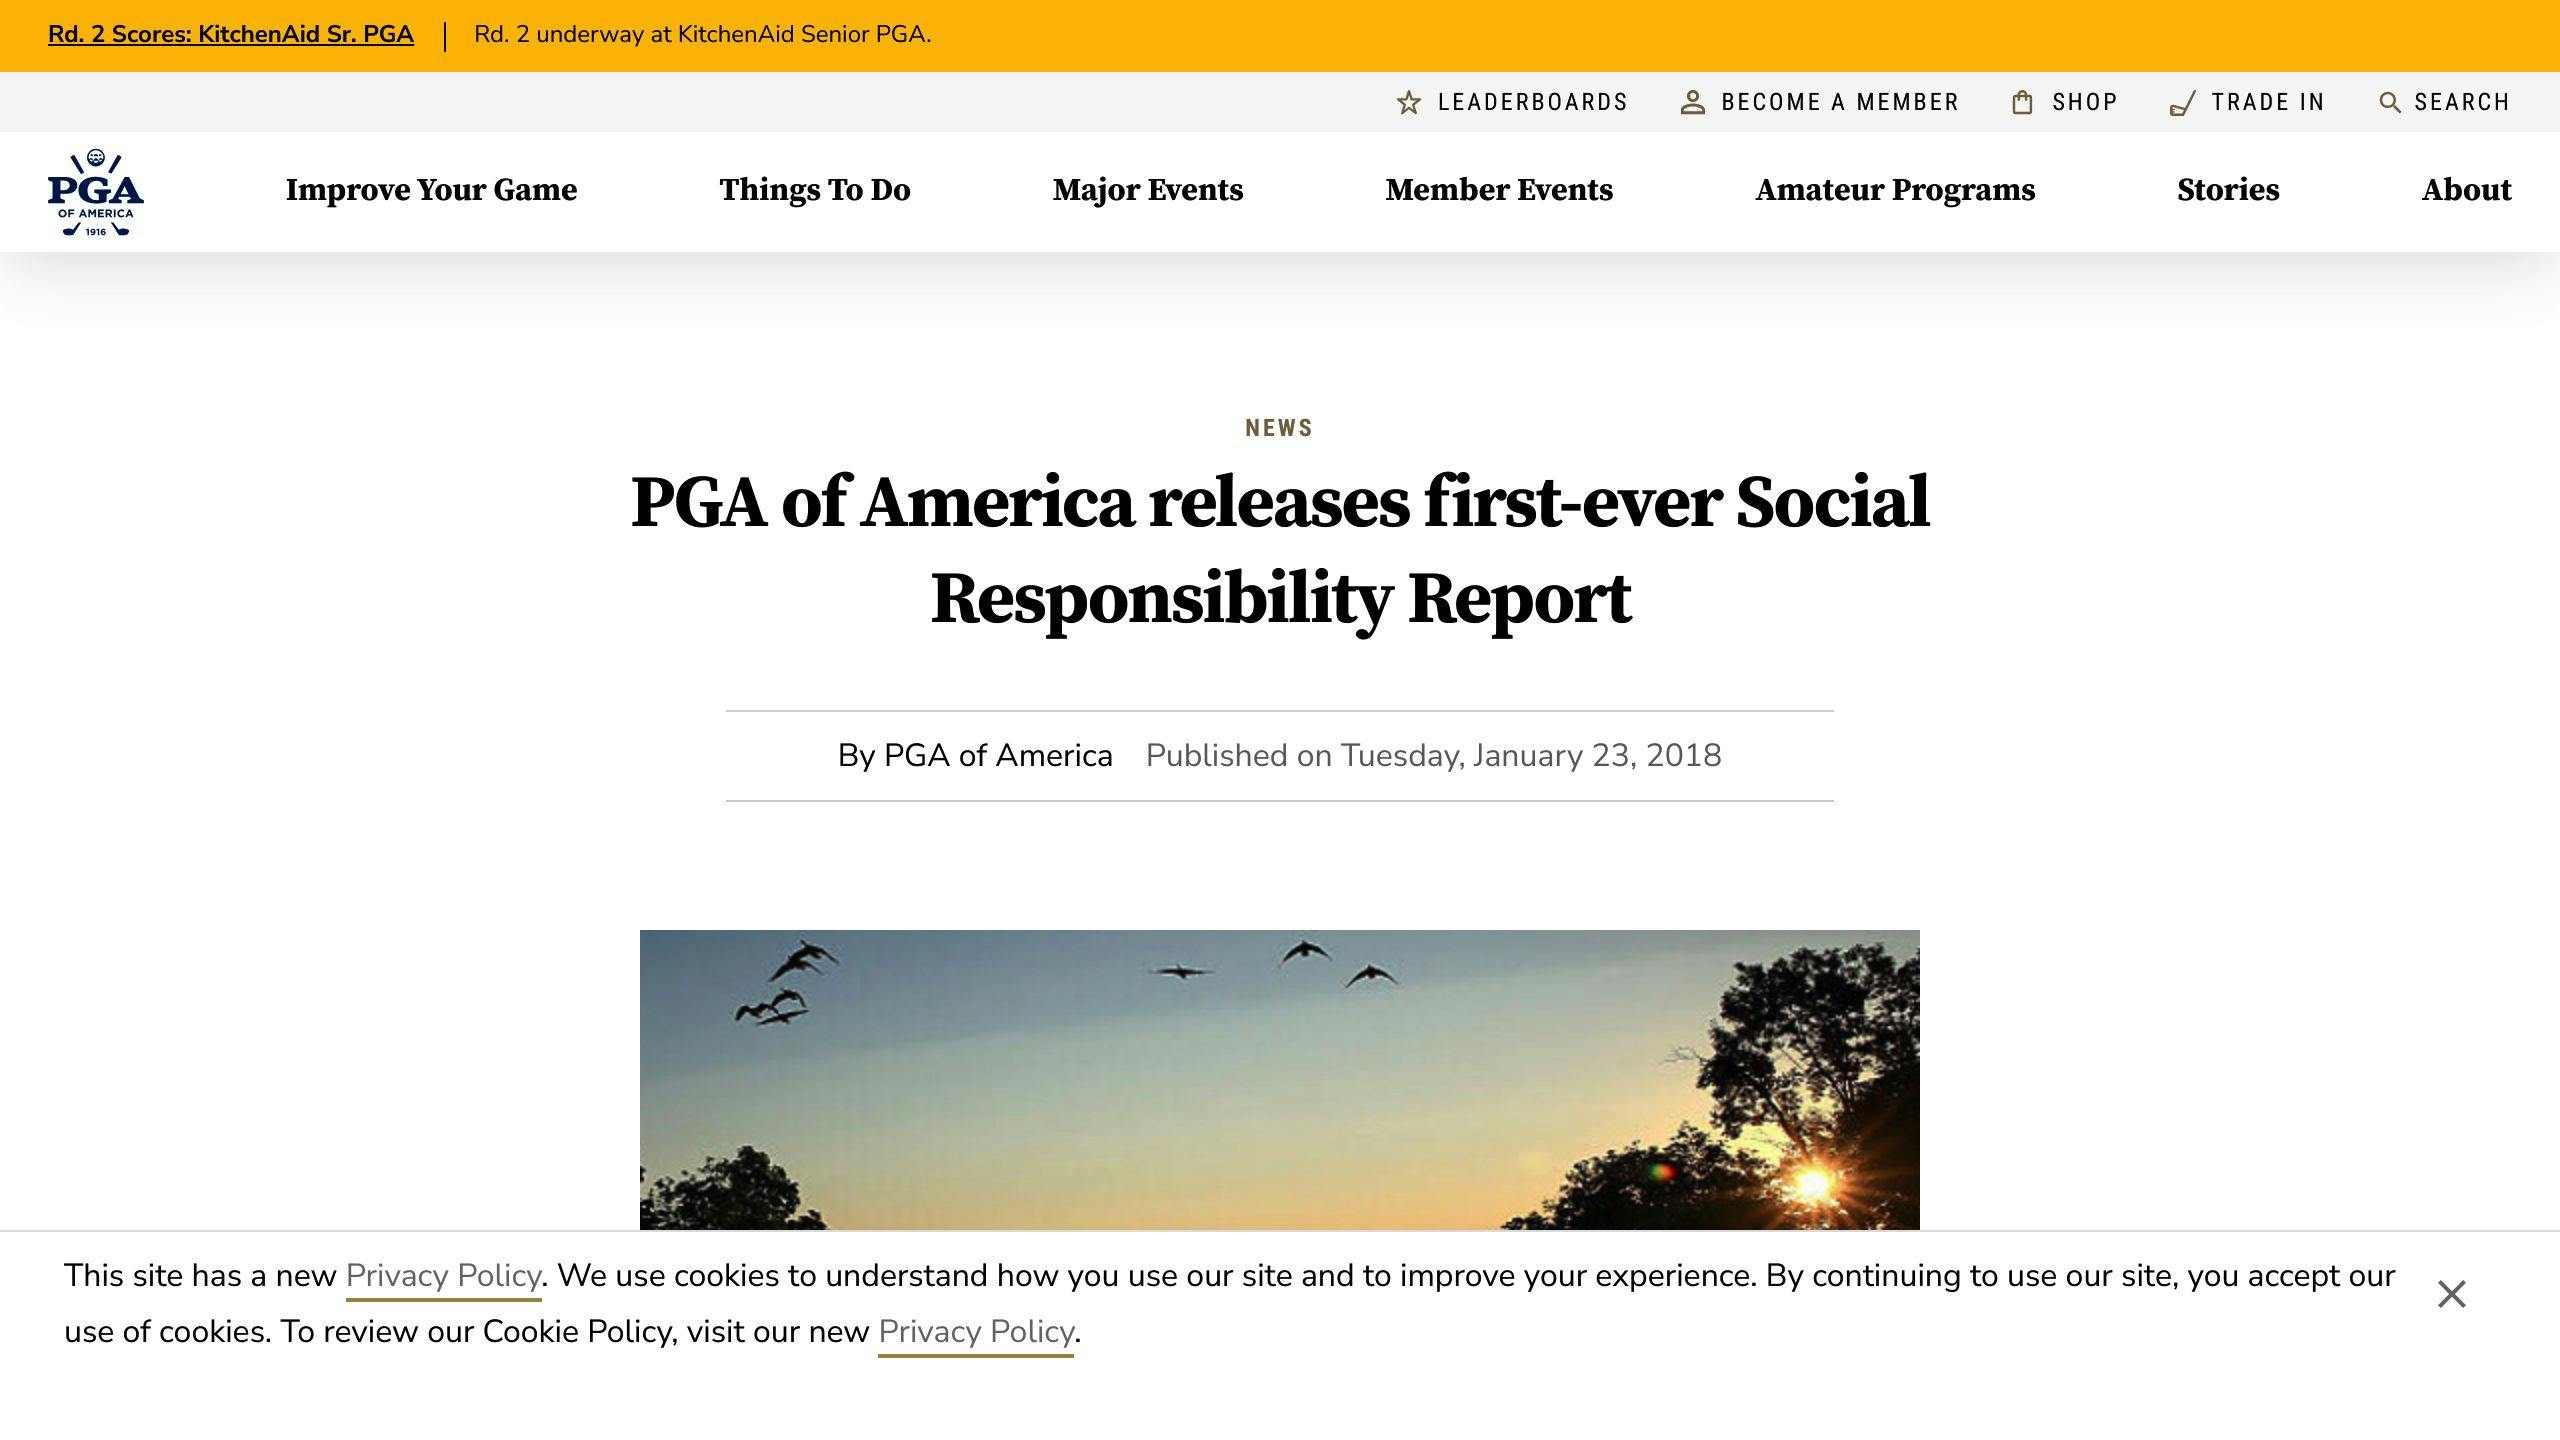 PGA of America's Social Responsibility Report